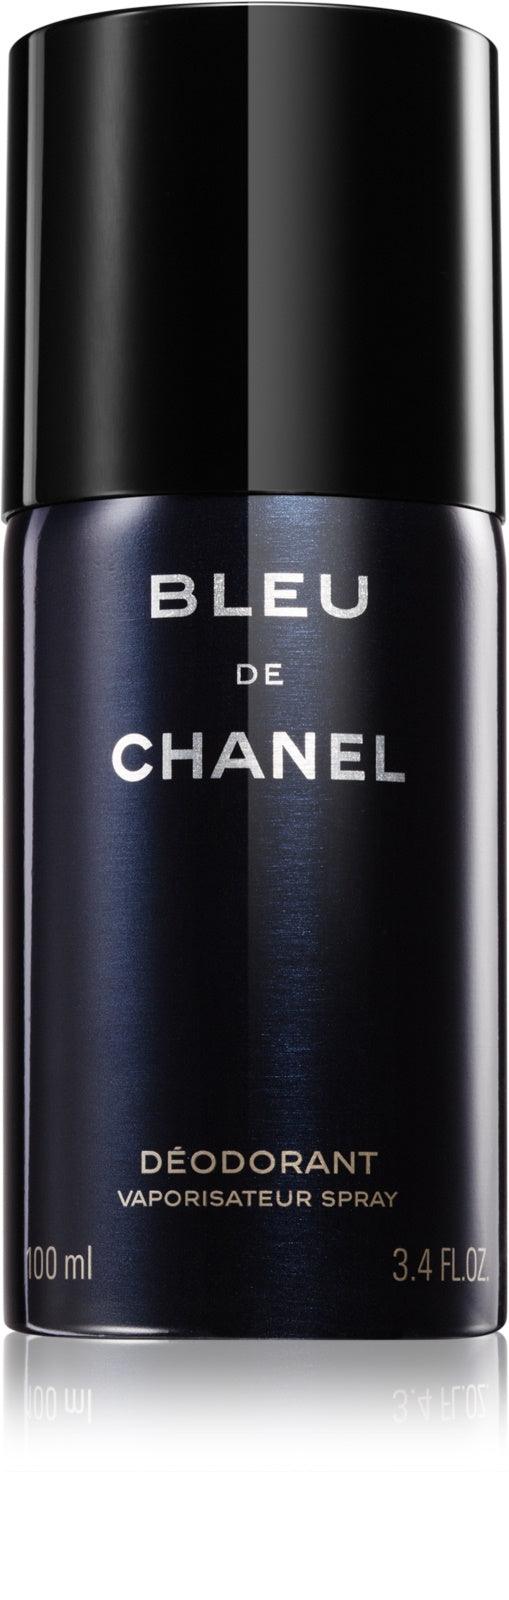 chanel bleu spray deodorant